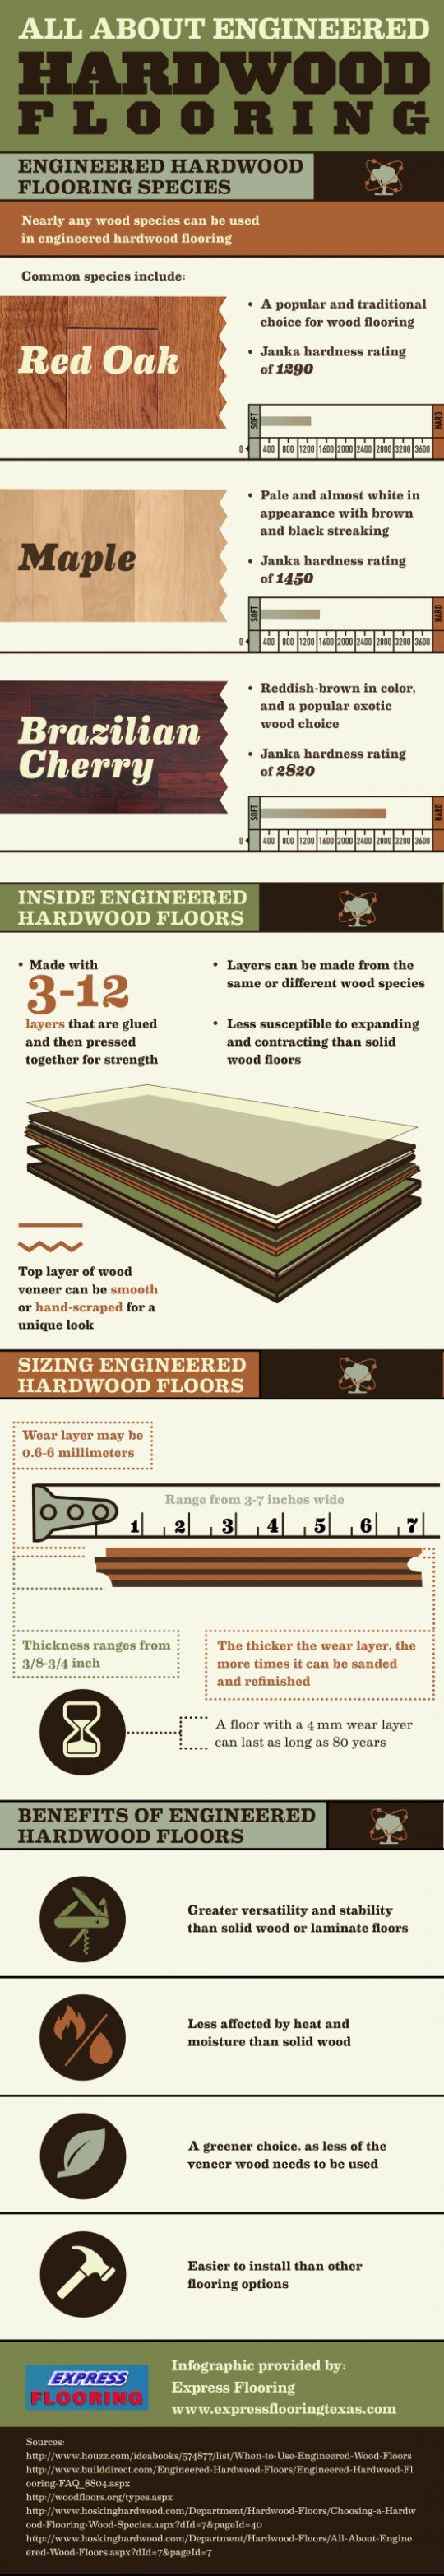 All About Engineered Hardwood Flooring 